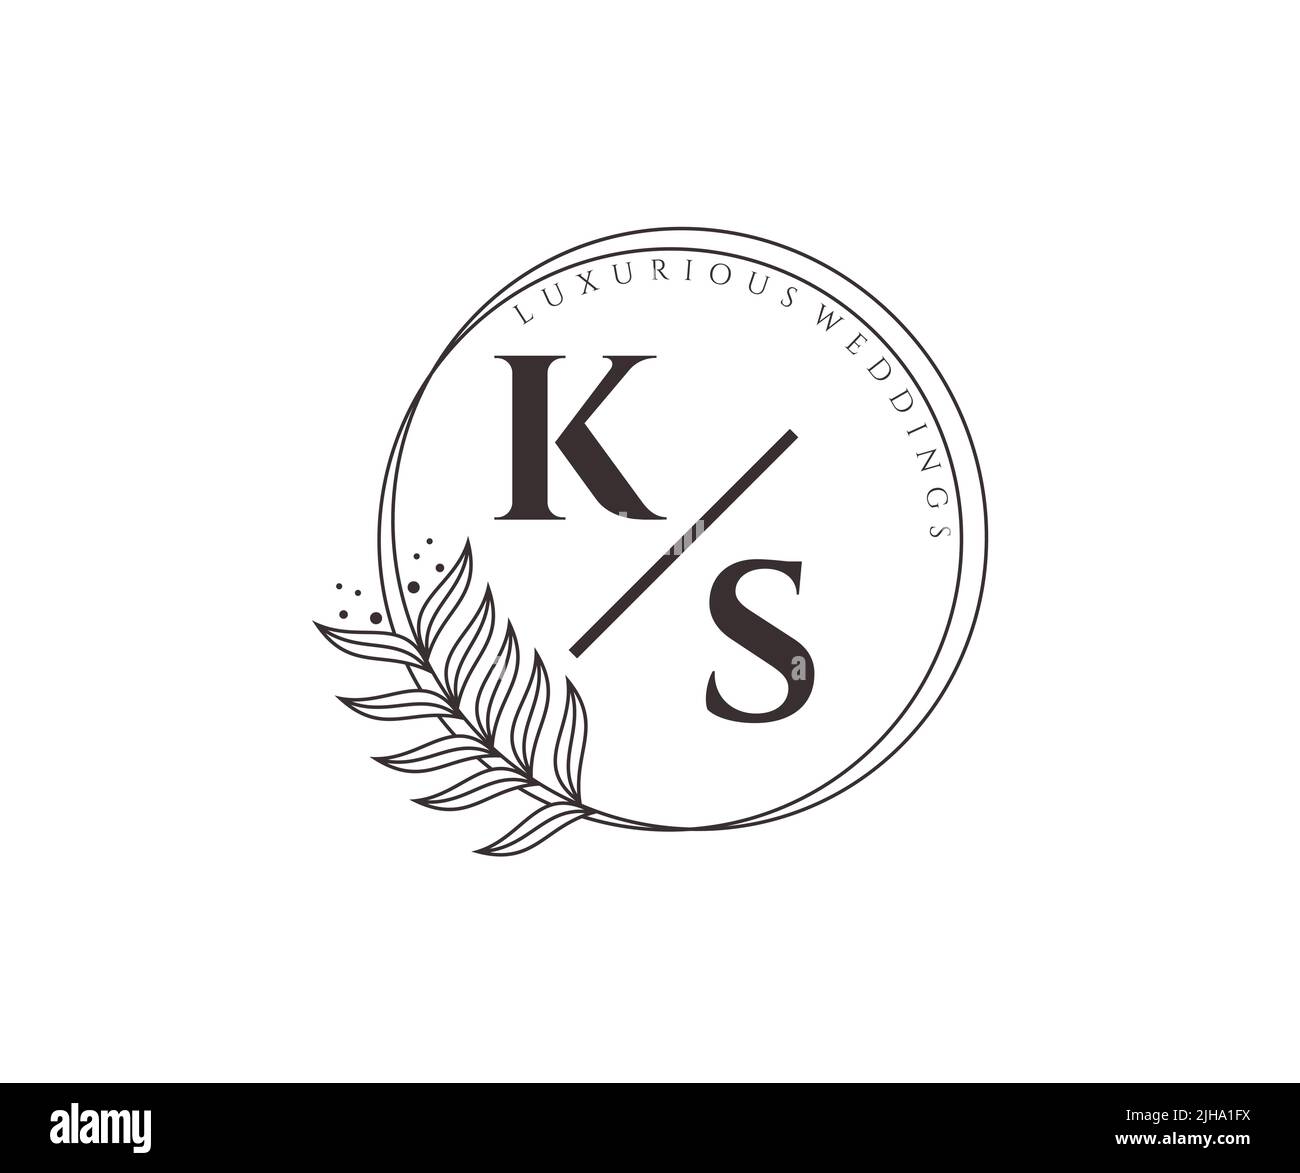 Ka initials letter wedding monogram logos Vector Image